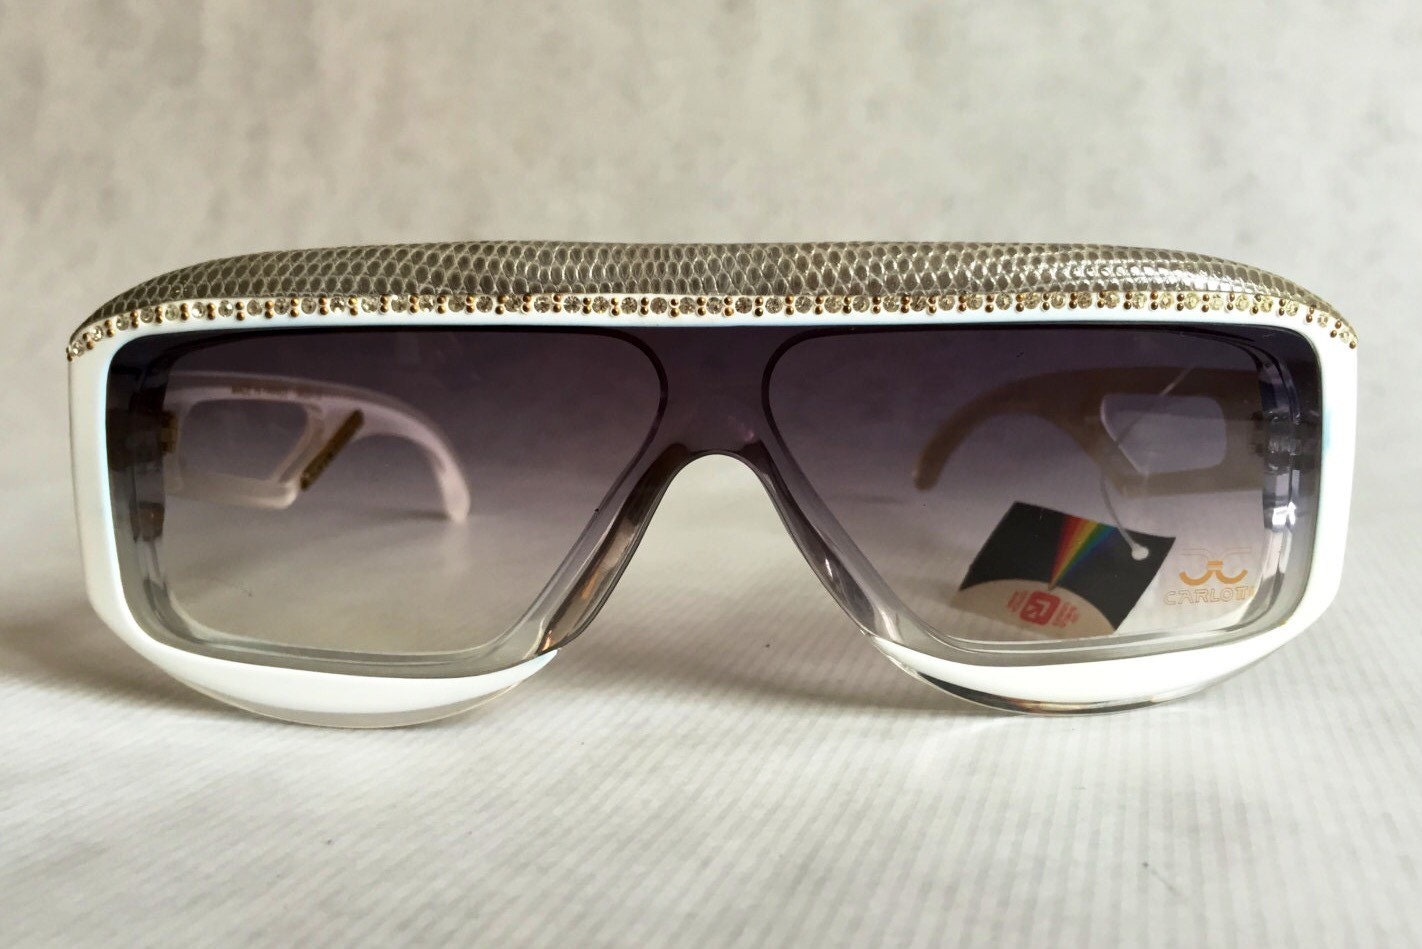 Claudia Carlotti Chaparal CS 7 Snakeskin Vintage Sunglasses New Old Stock